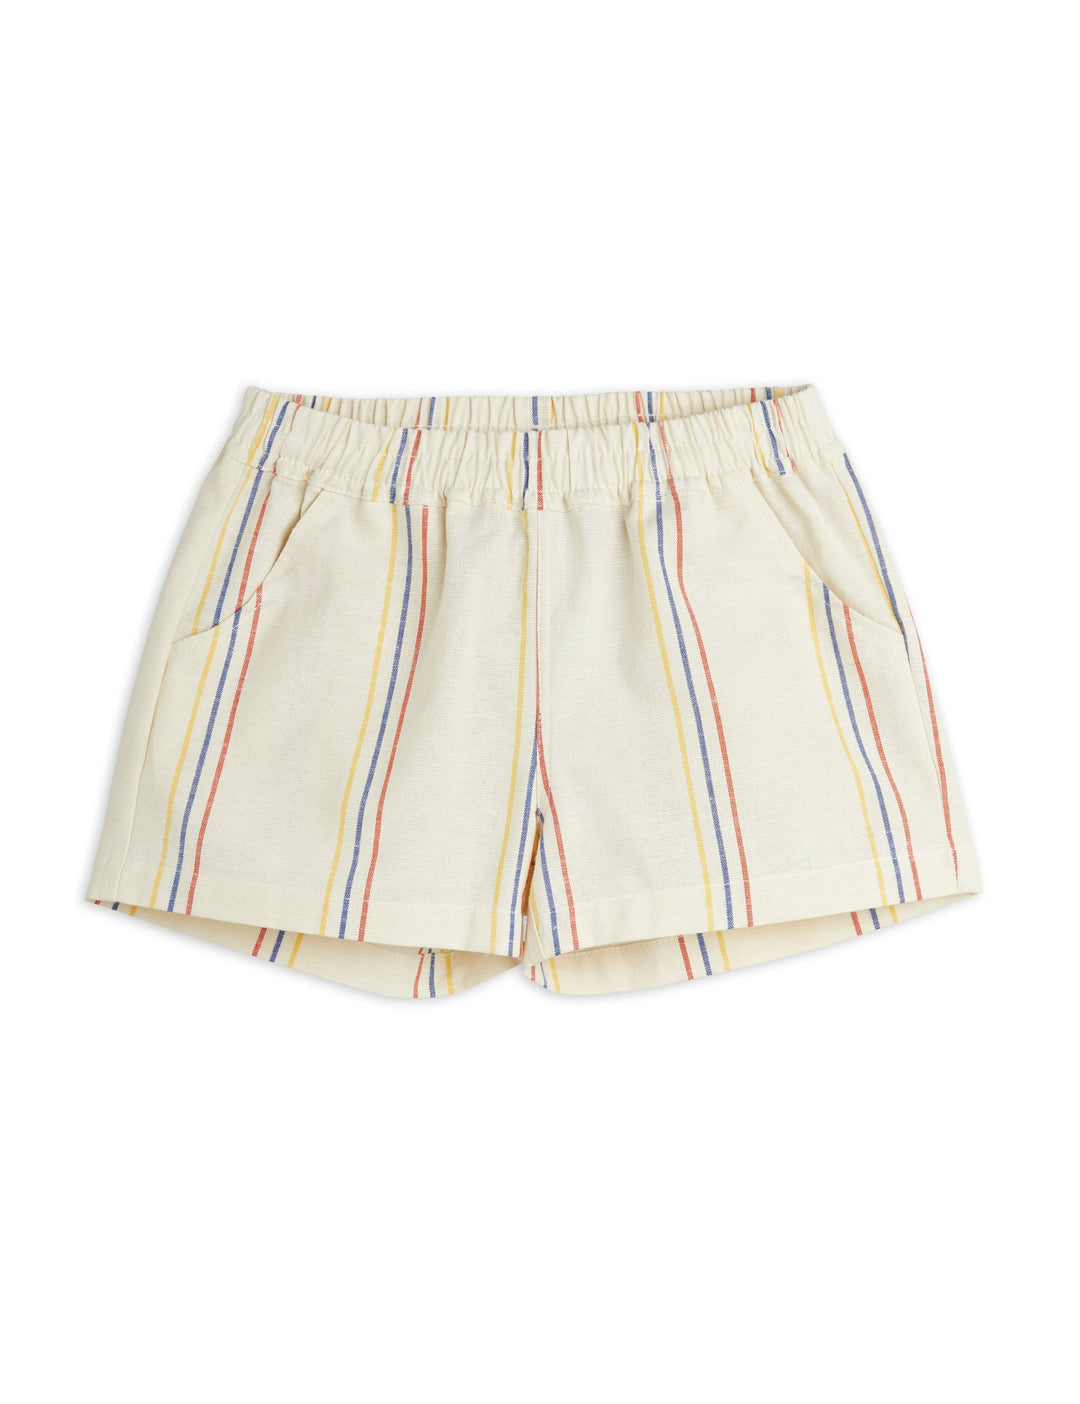 Stripe y/d woven shorts